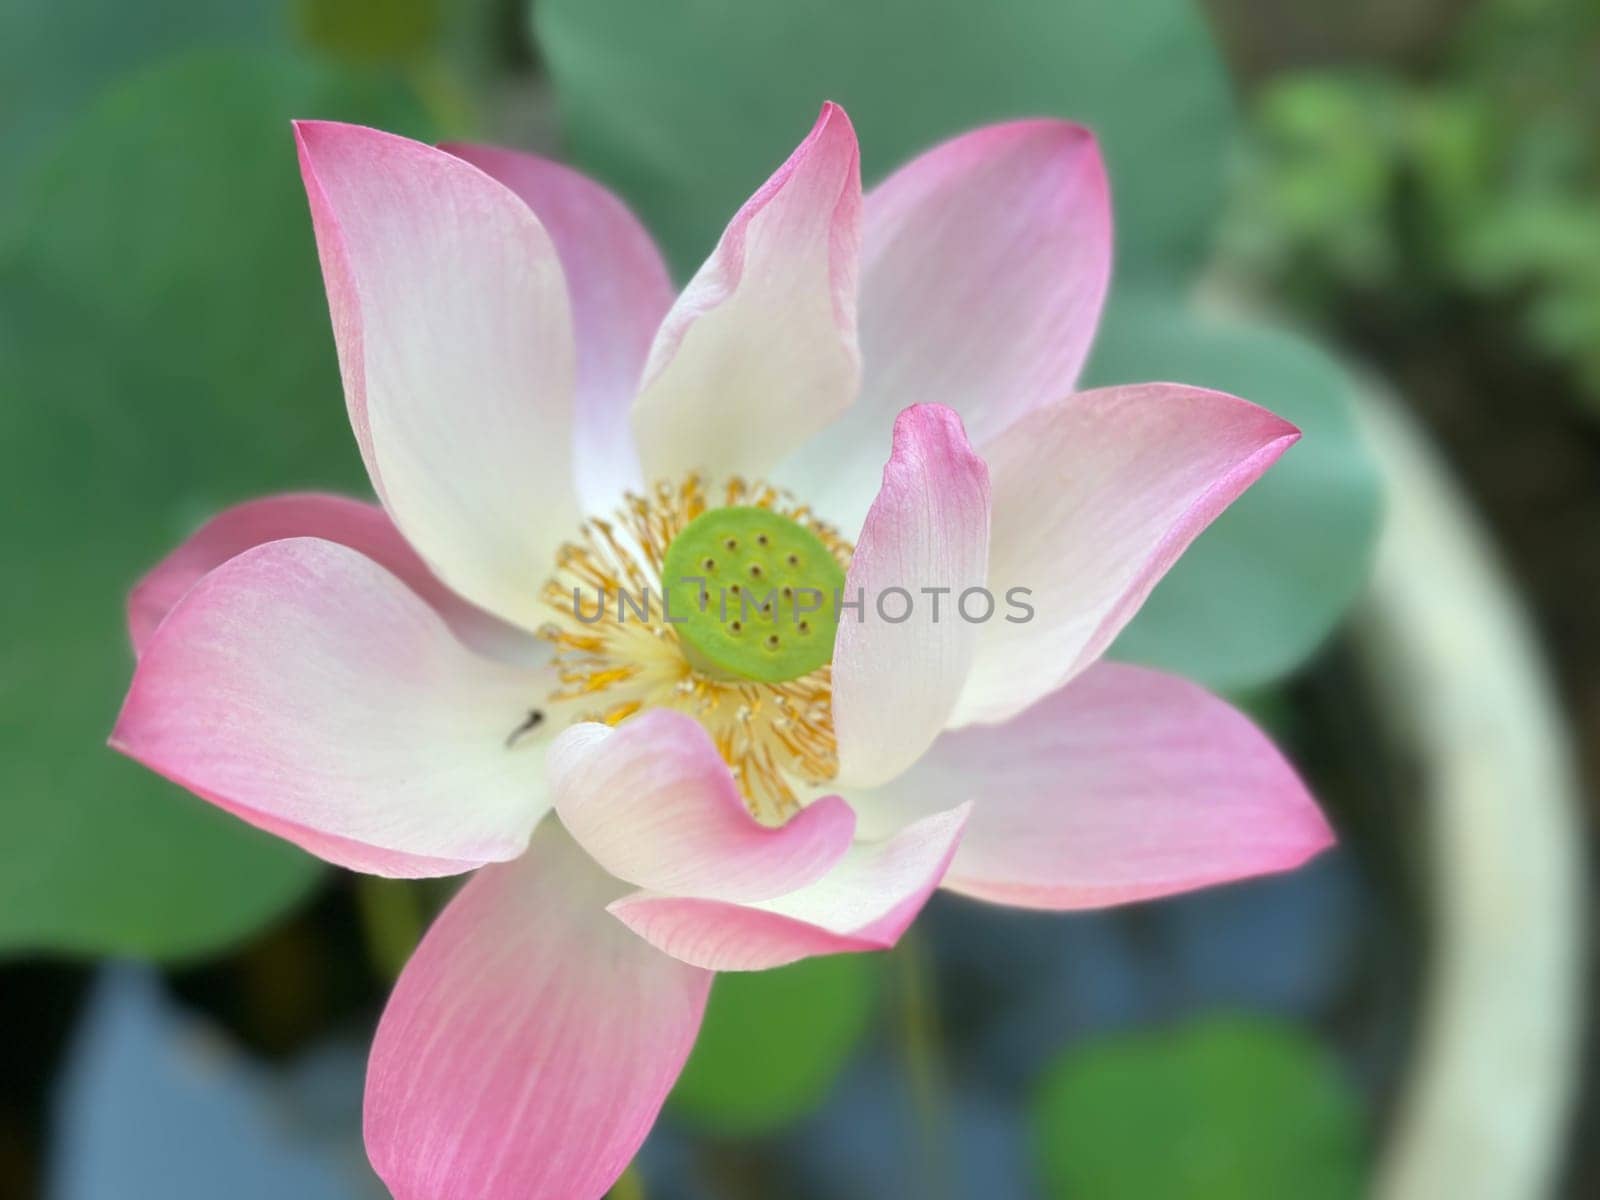 Lotus flower (Lotus or Nelumbo) by NongEngEng